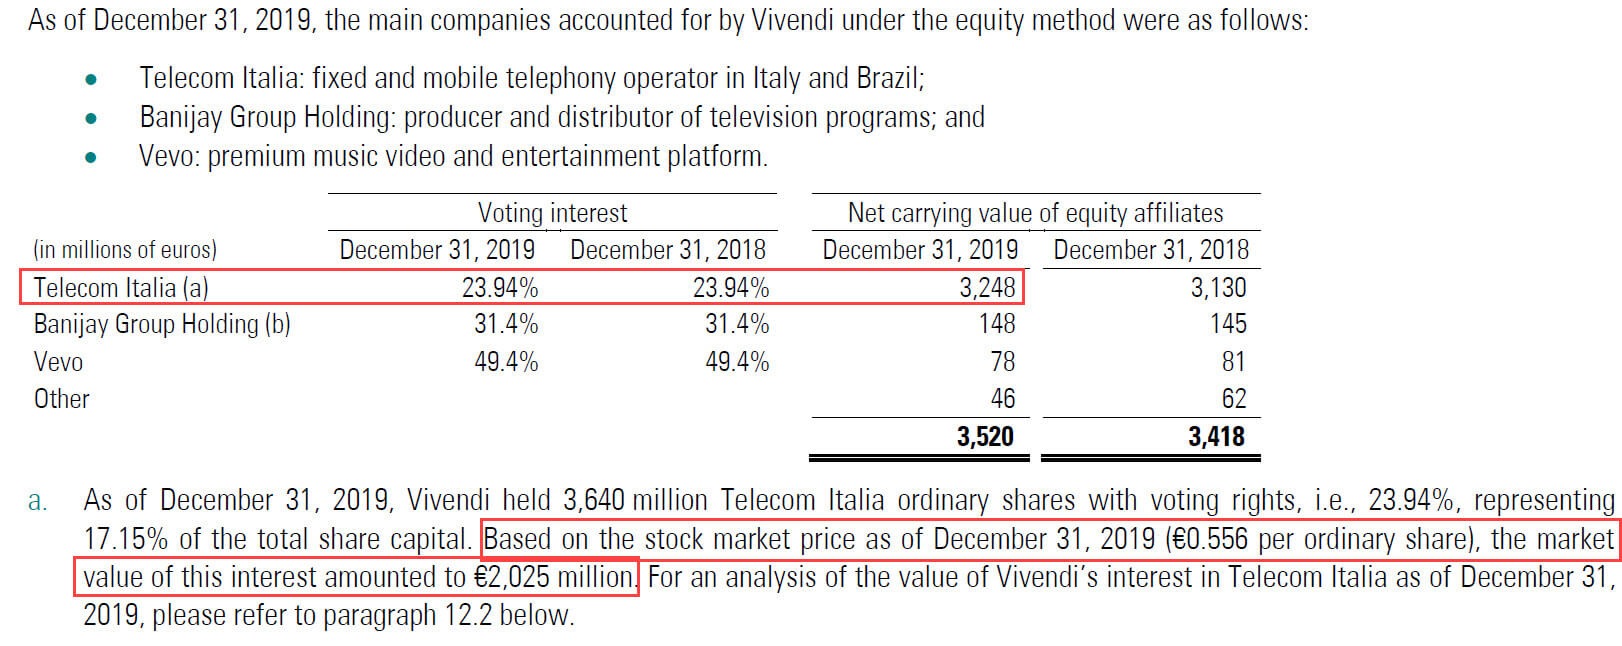 Vivendi - Equity Investment Market Values